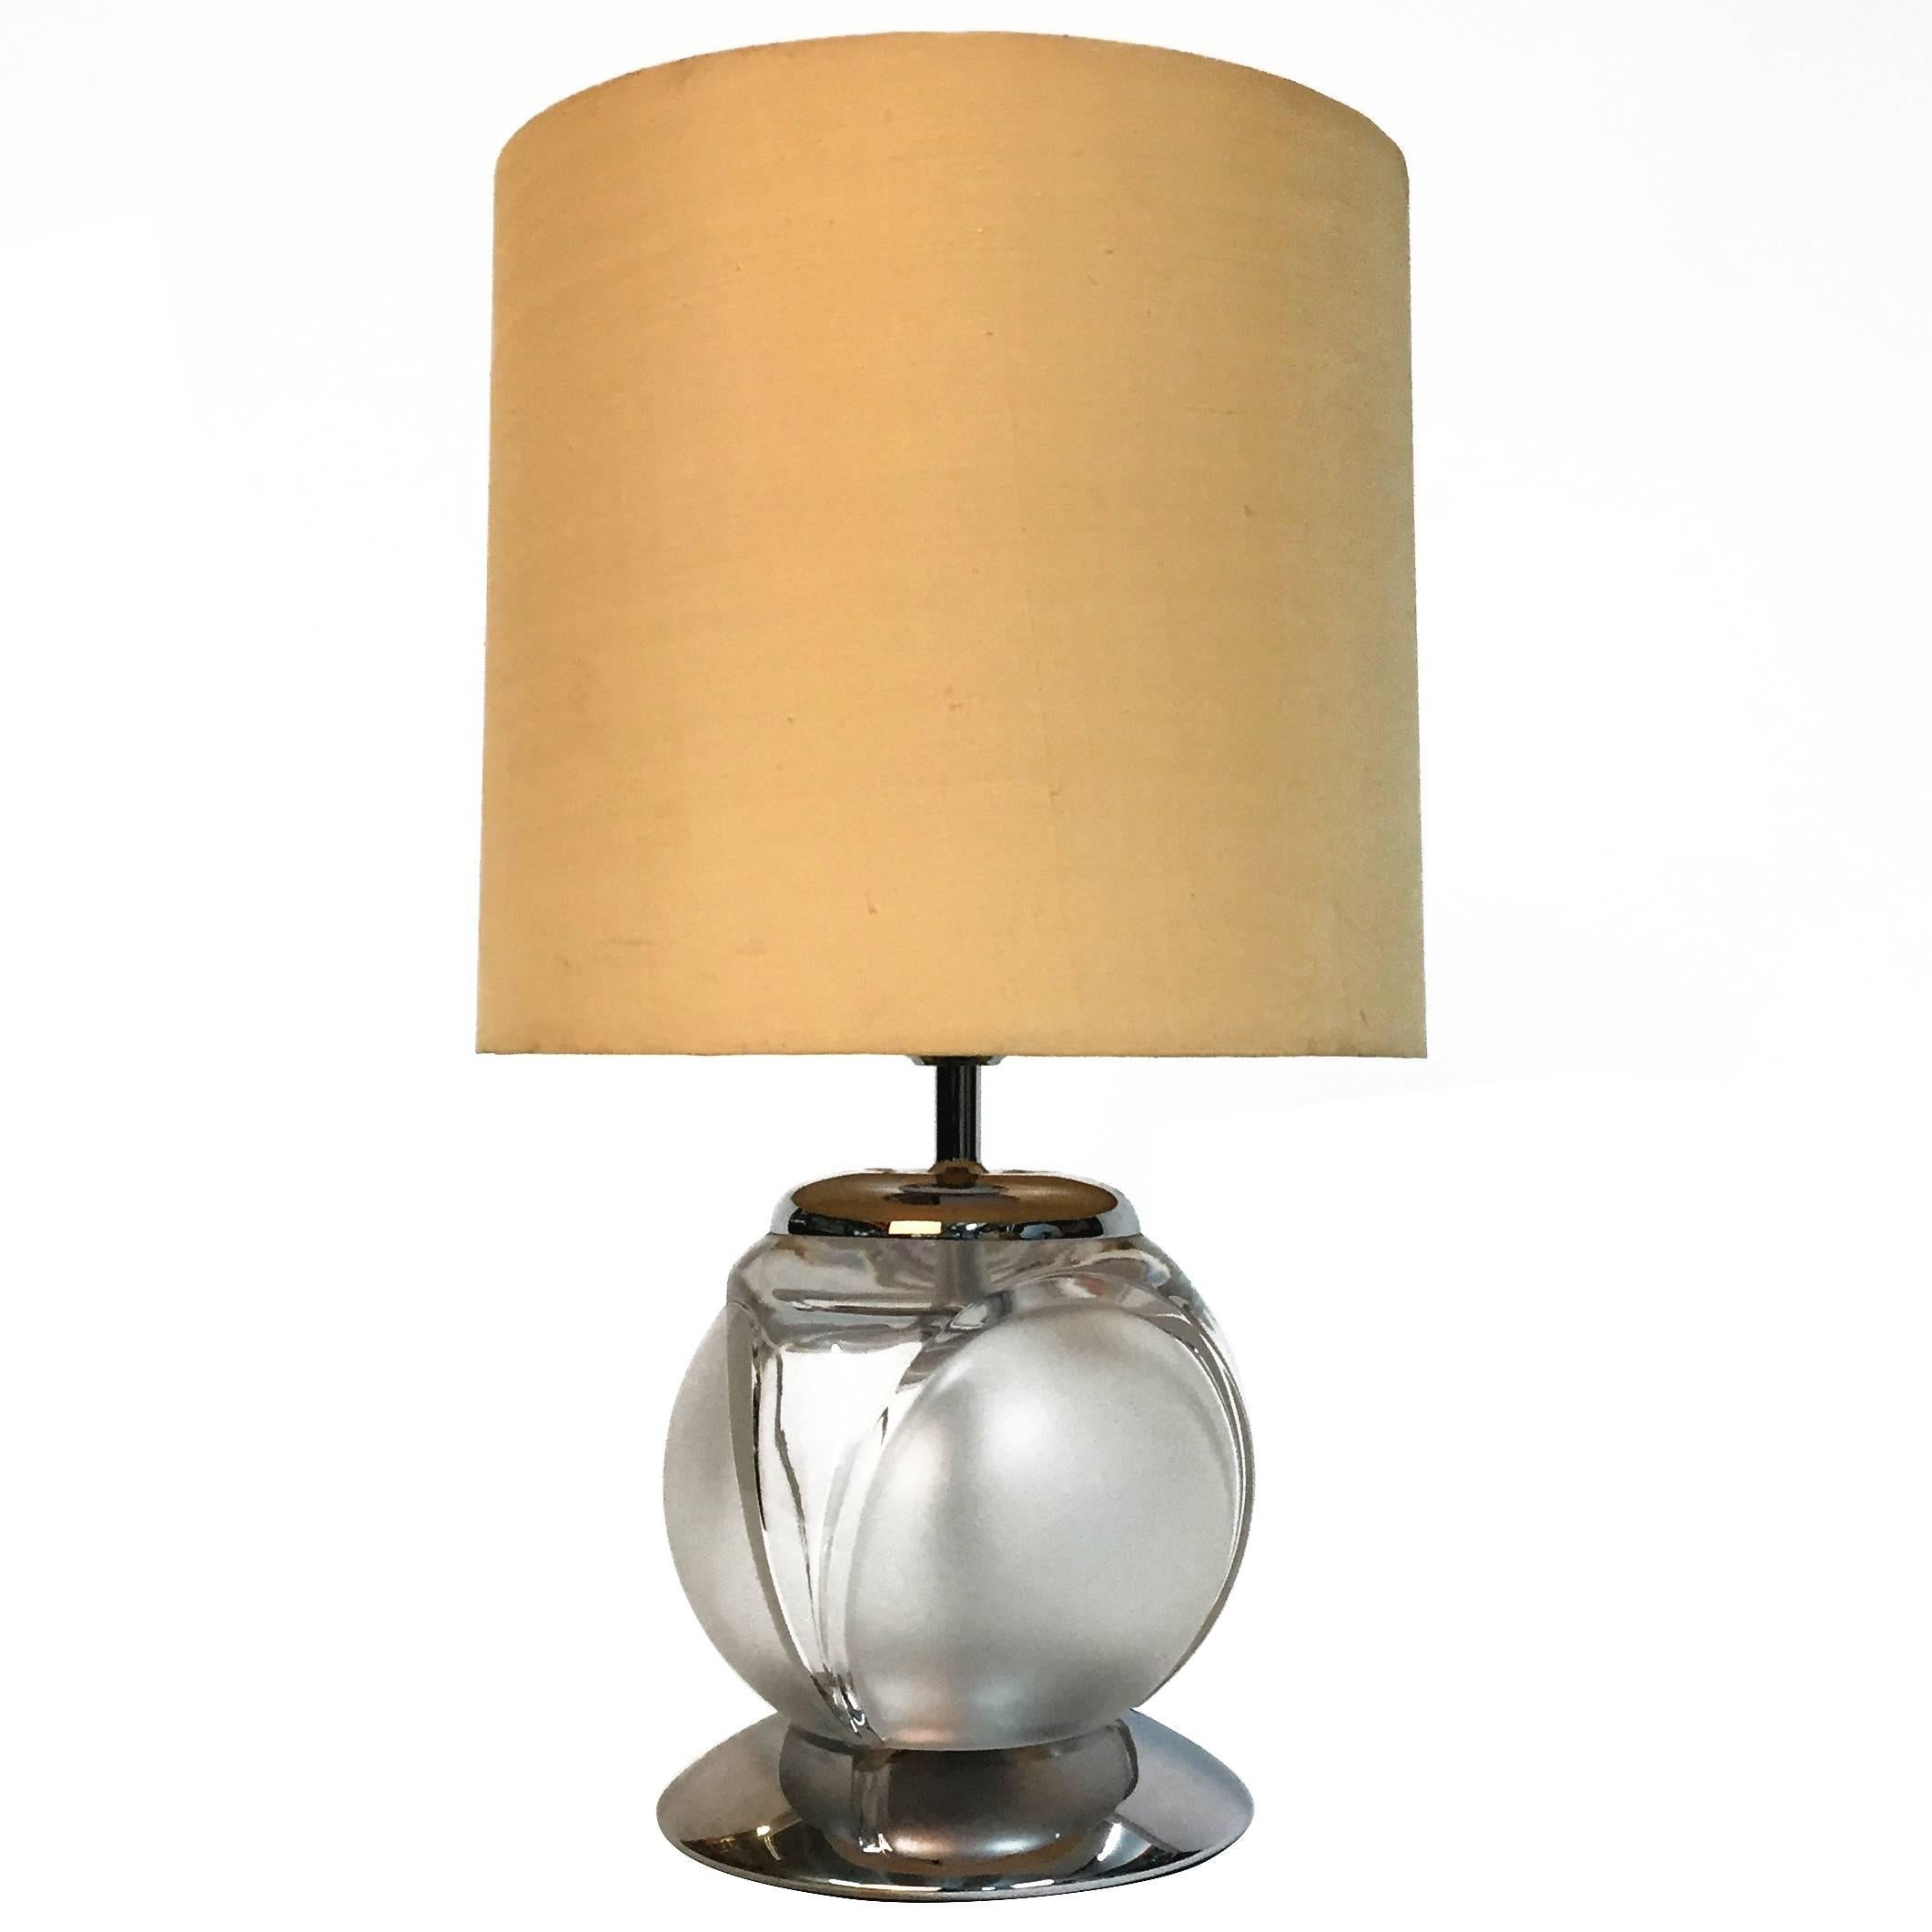 Impressive German Art Deco Table Lamp